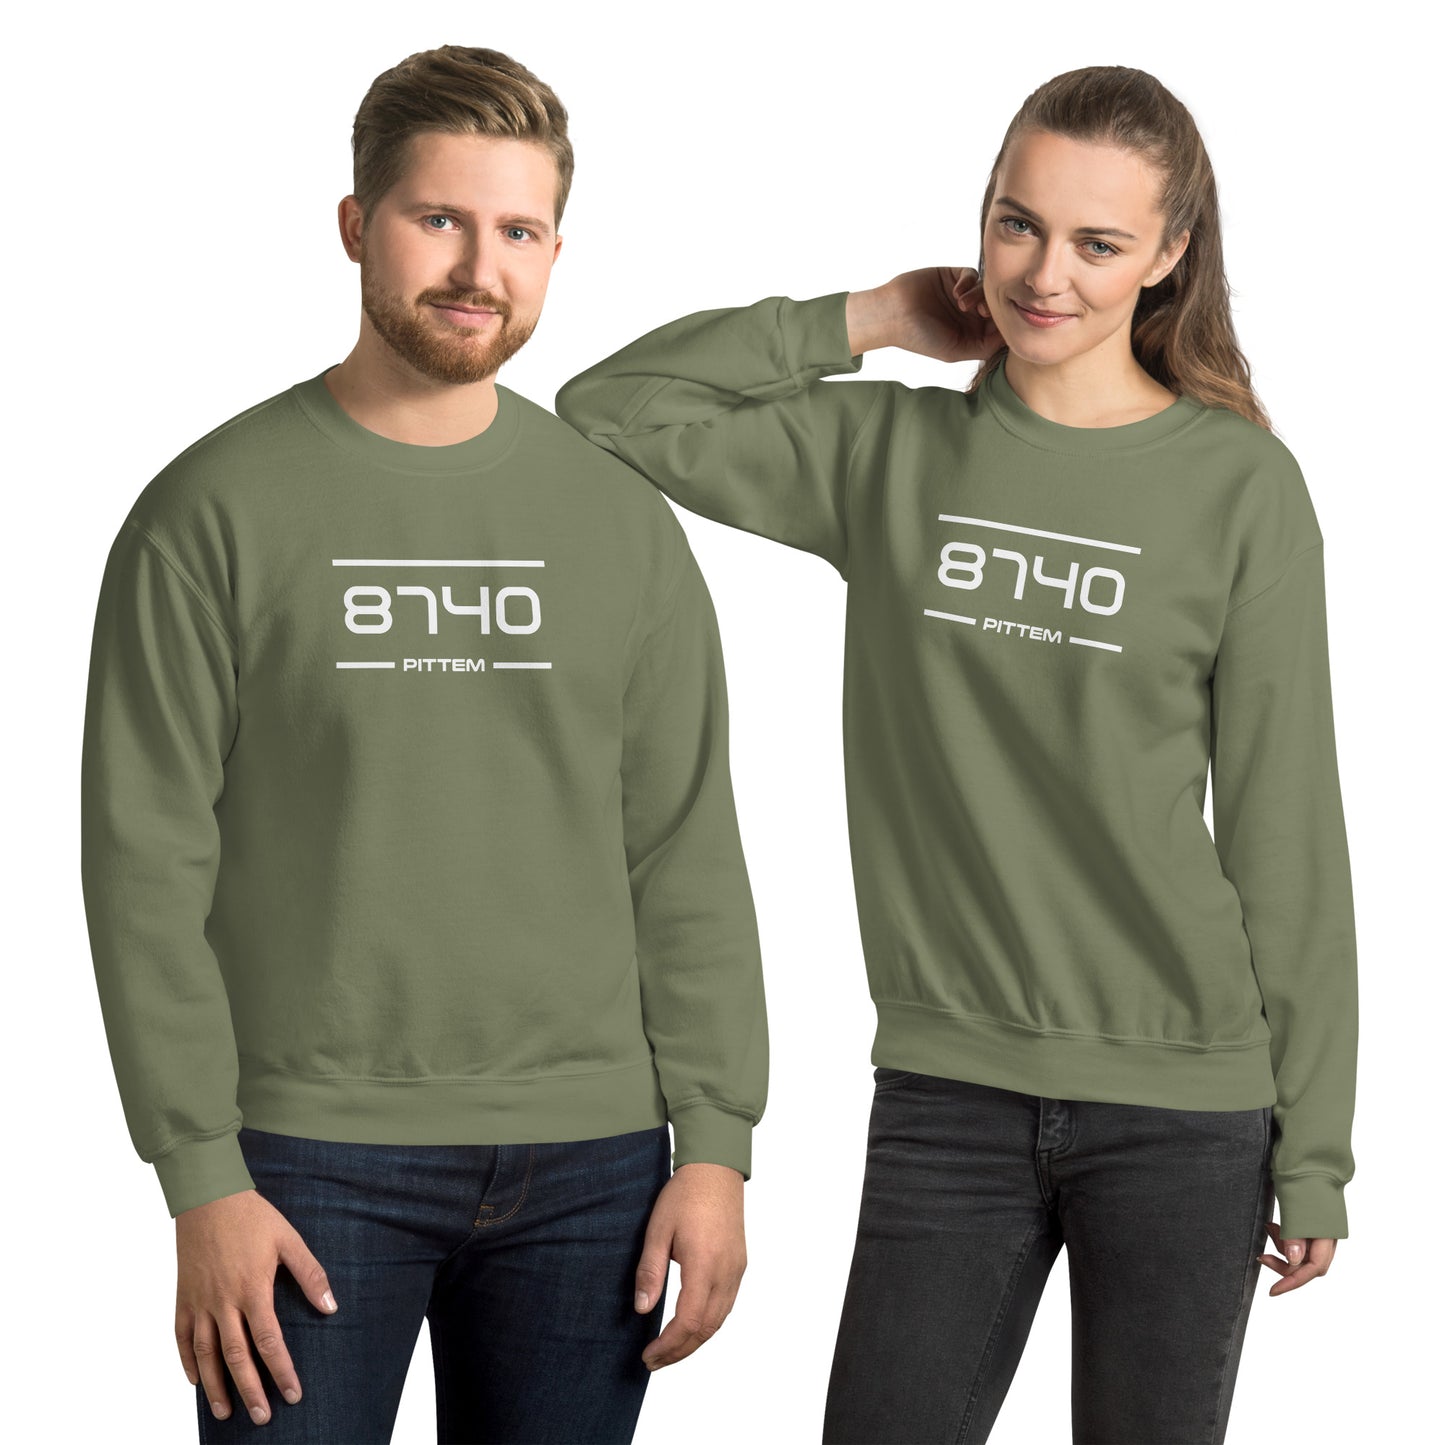 Sweater - 8740 - Pittem (M/V)